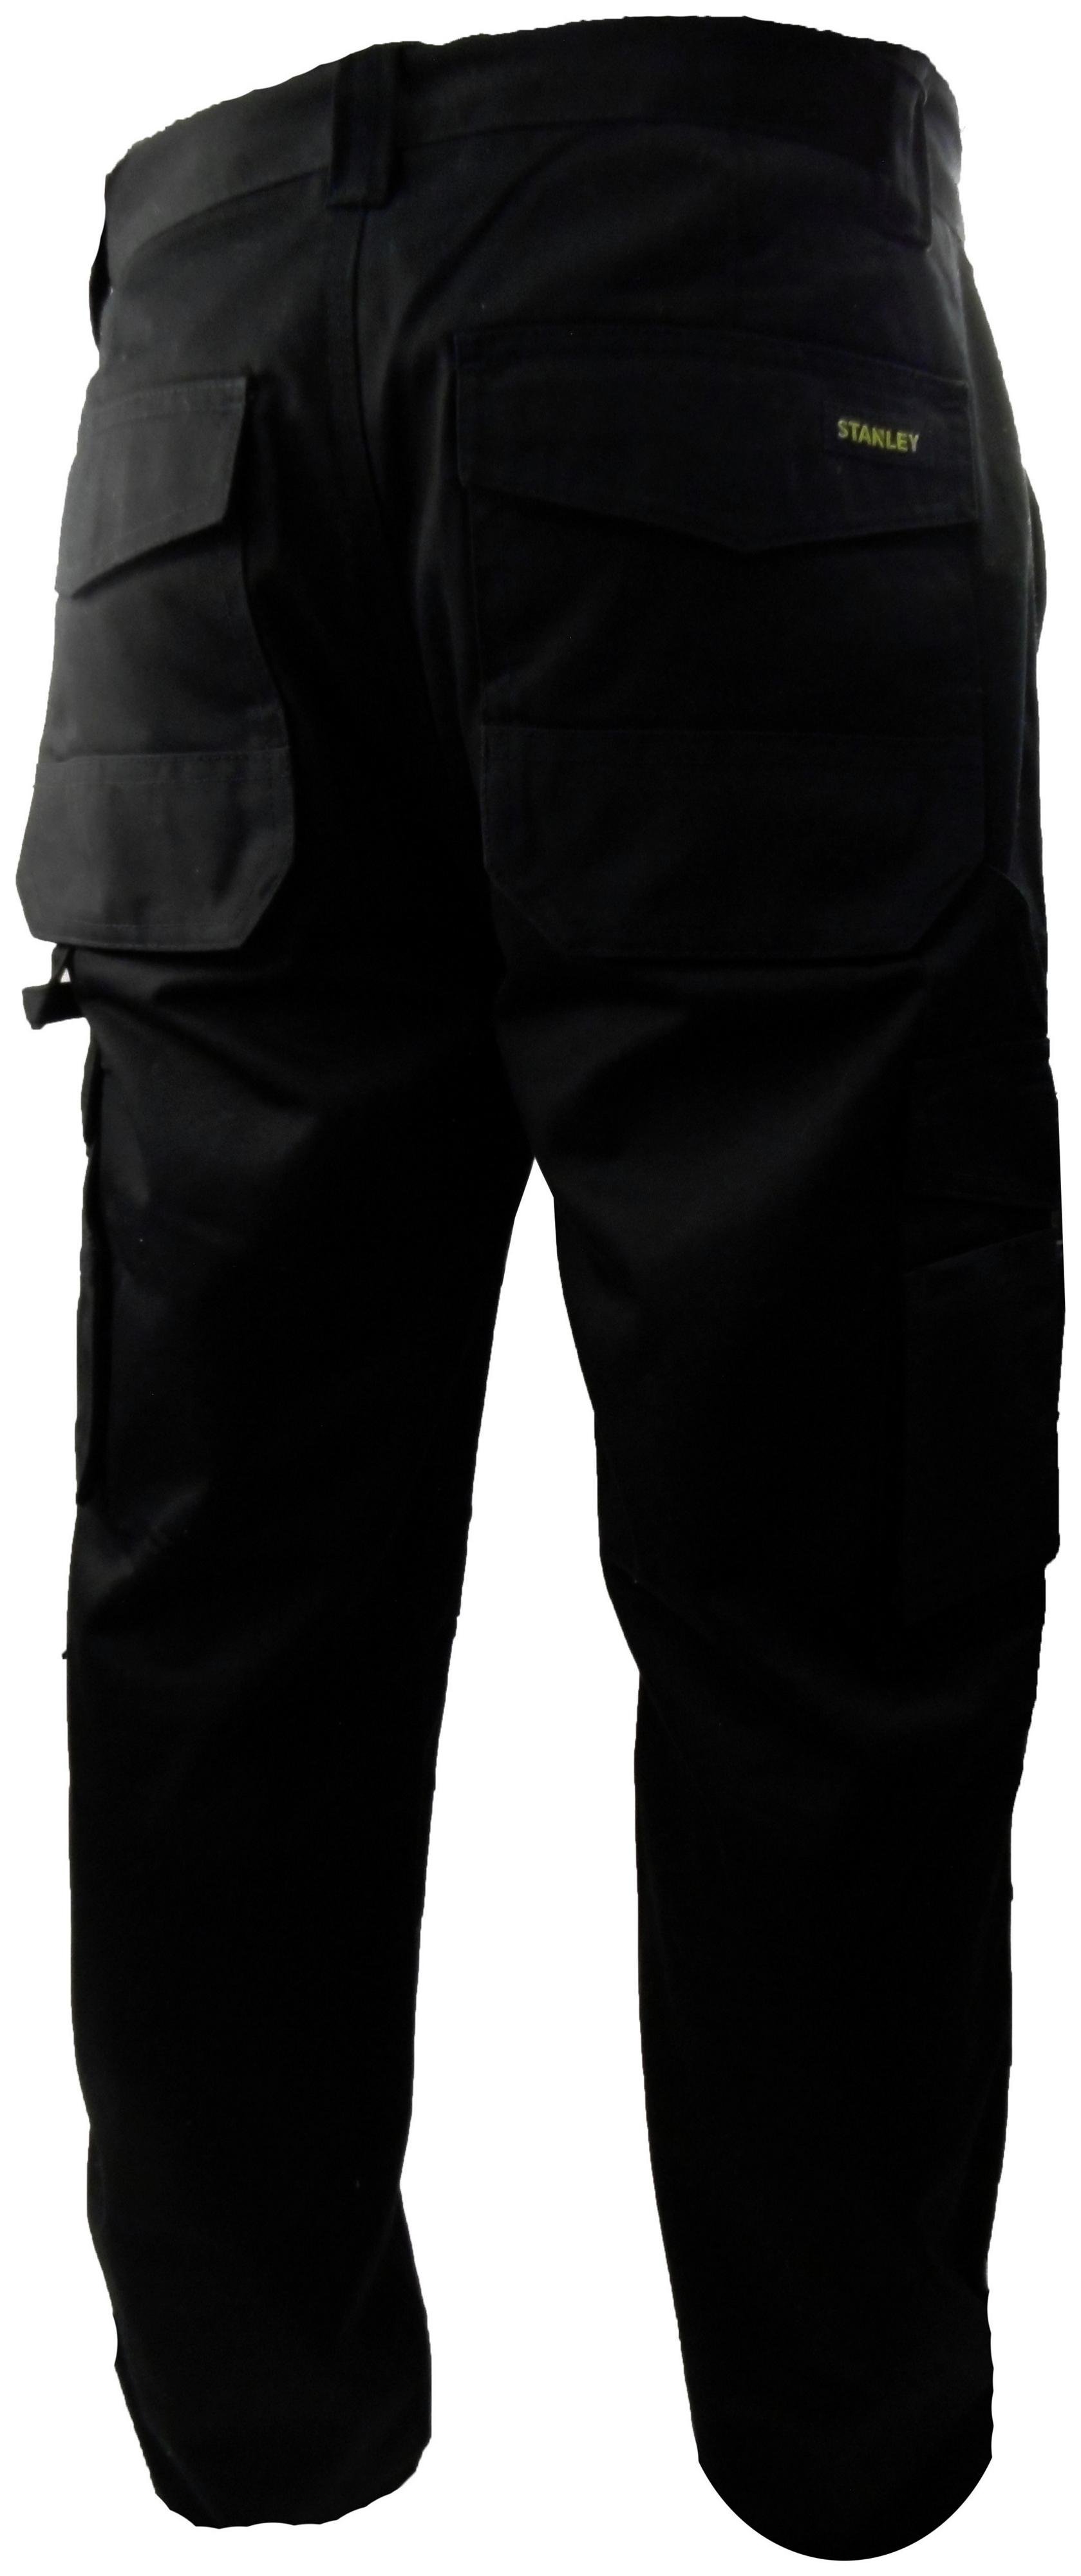 Stanley Phoenix Men's Black Trouser - 33 to 38 inch. Review